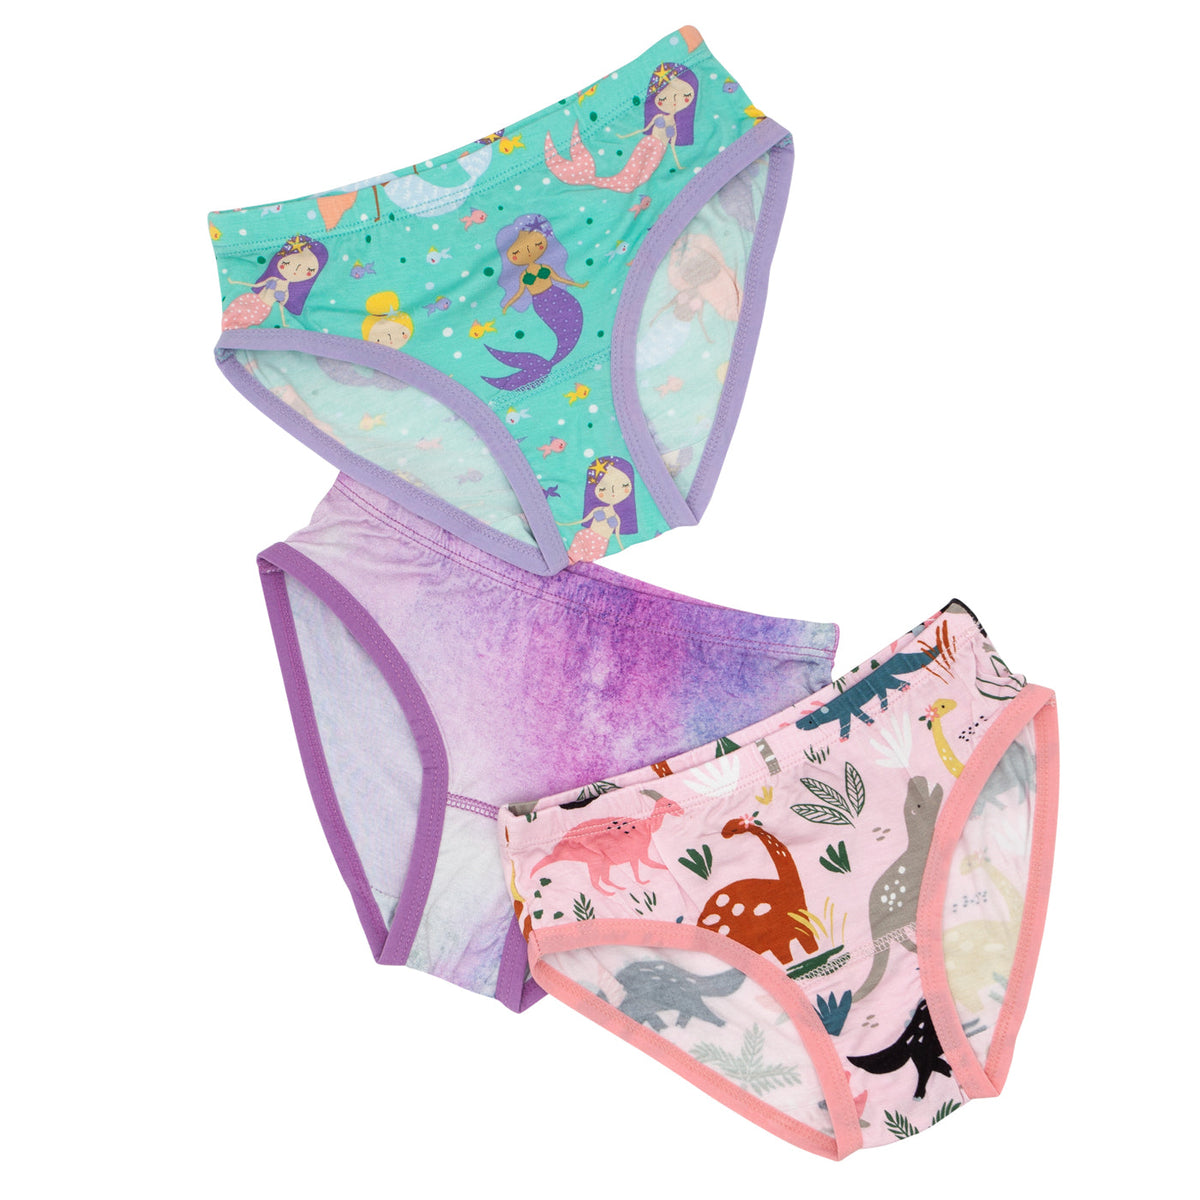 Disney Girls' Princess Underwear Pack of 5 Pink Size 4 